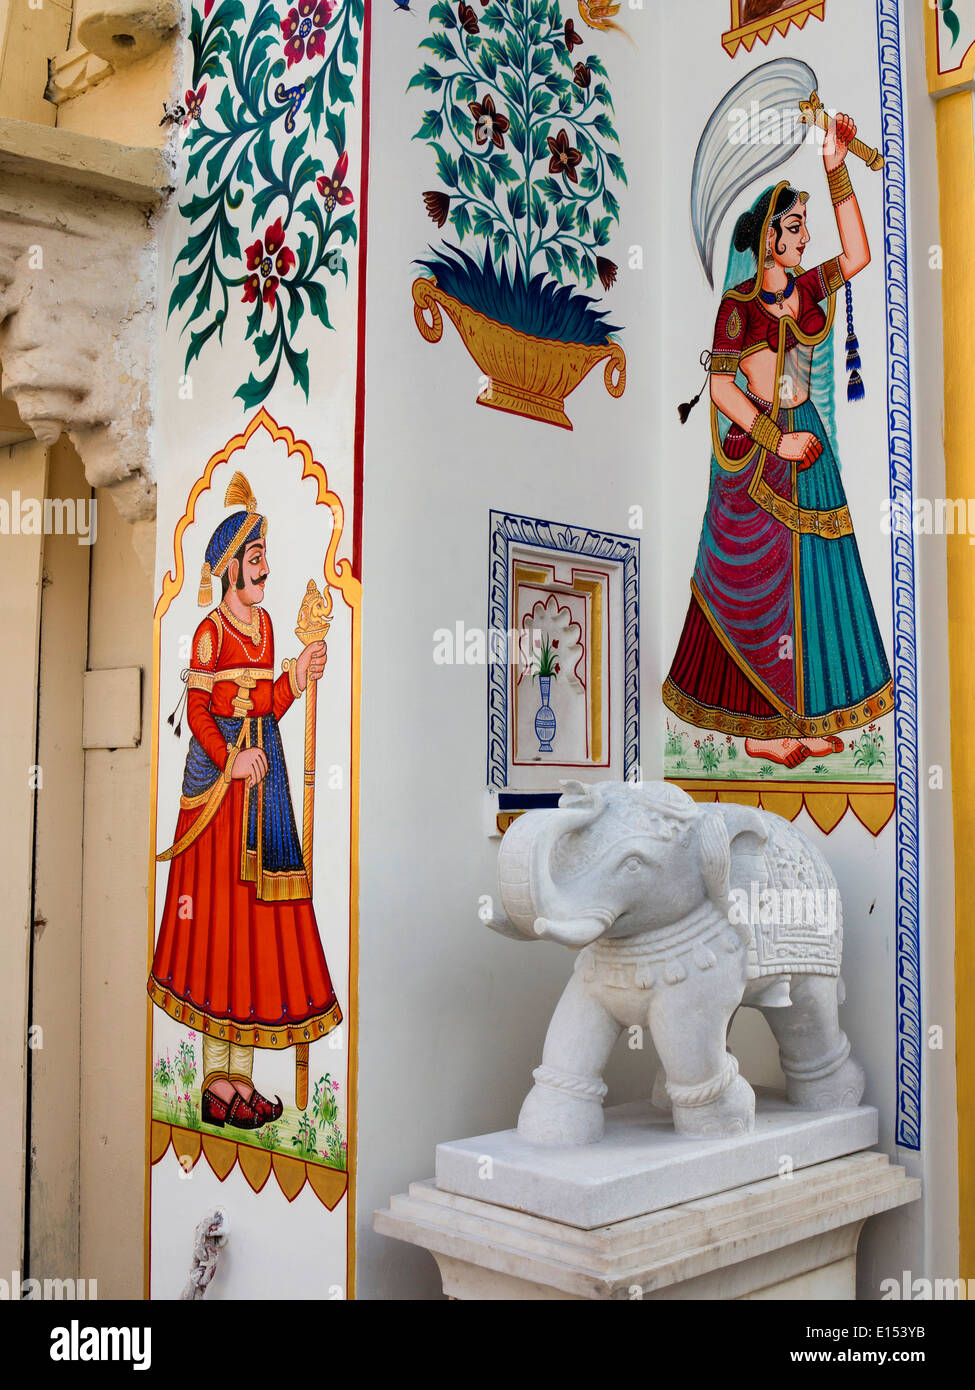 India Rajasthan, Udaipur, City Palace e di alta qualità di Rajasthani tradizionale arte popolare, pitture murali Foto Stock